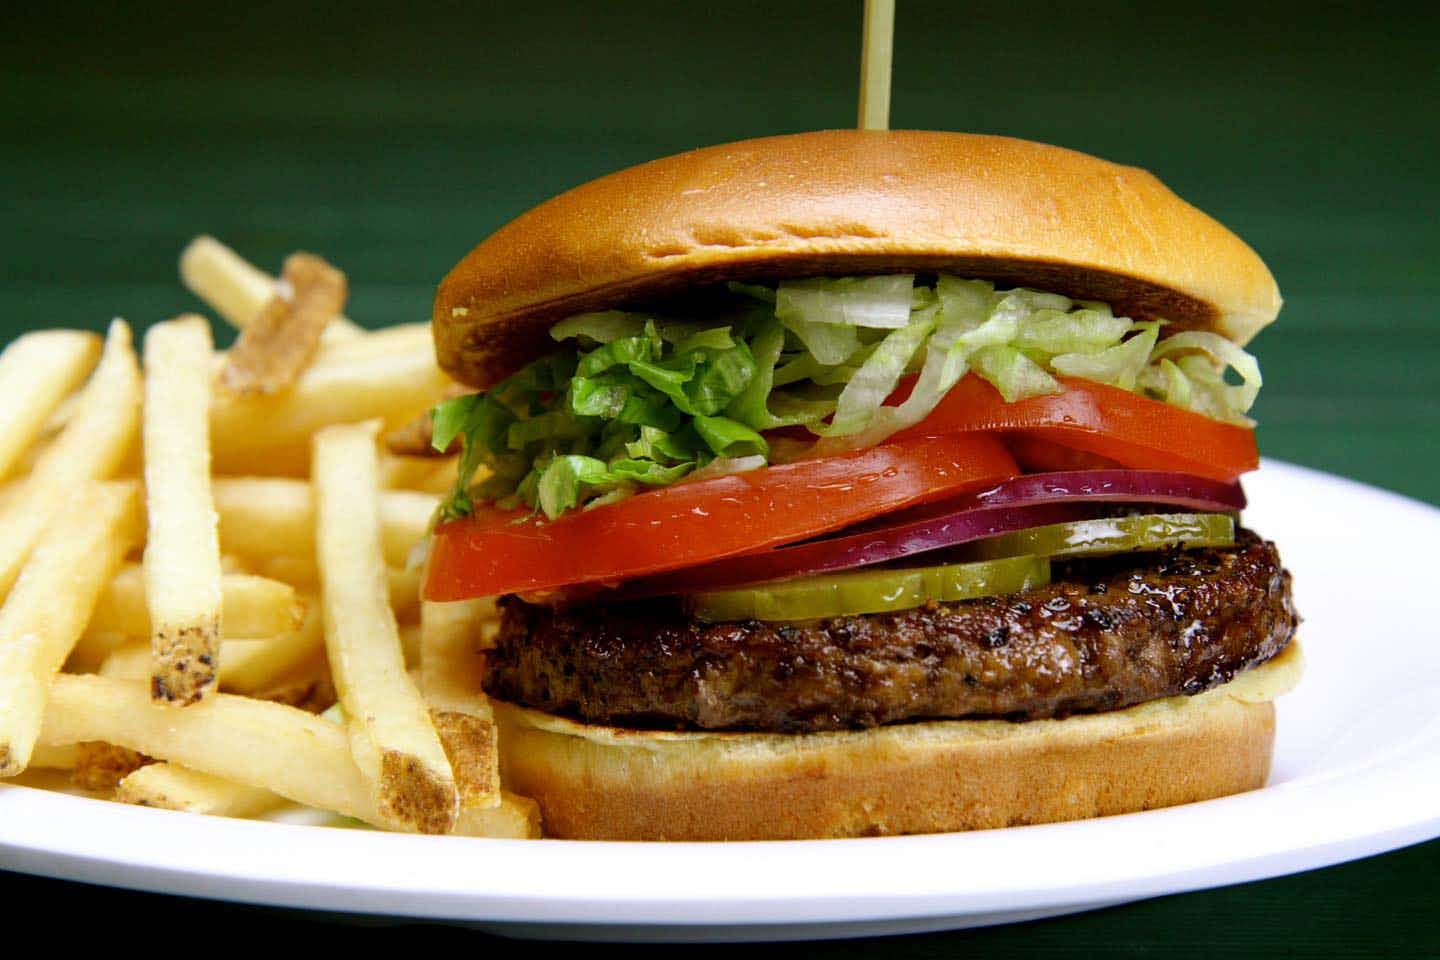 A close up on a Beef 'O' Brady's hamburger and fries